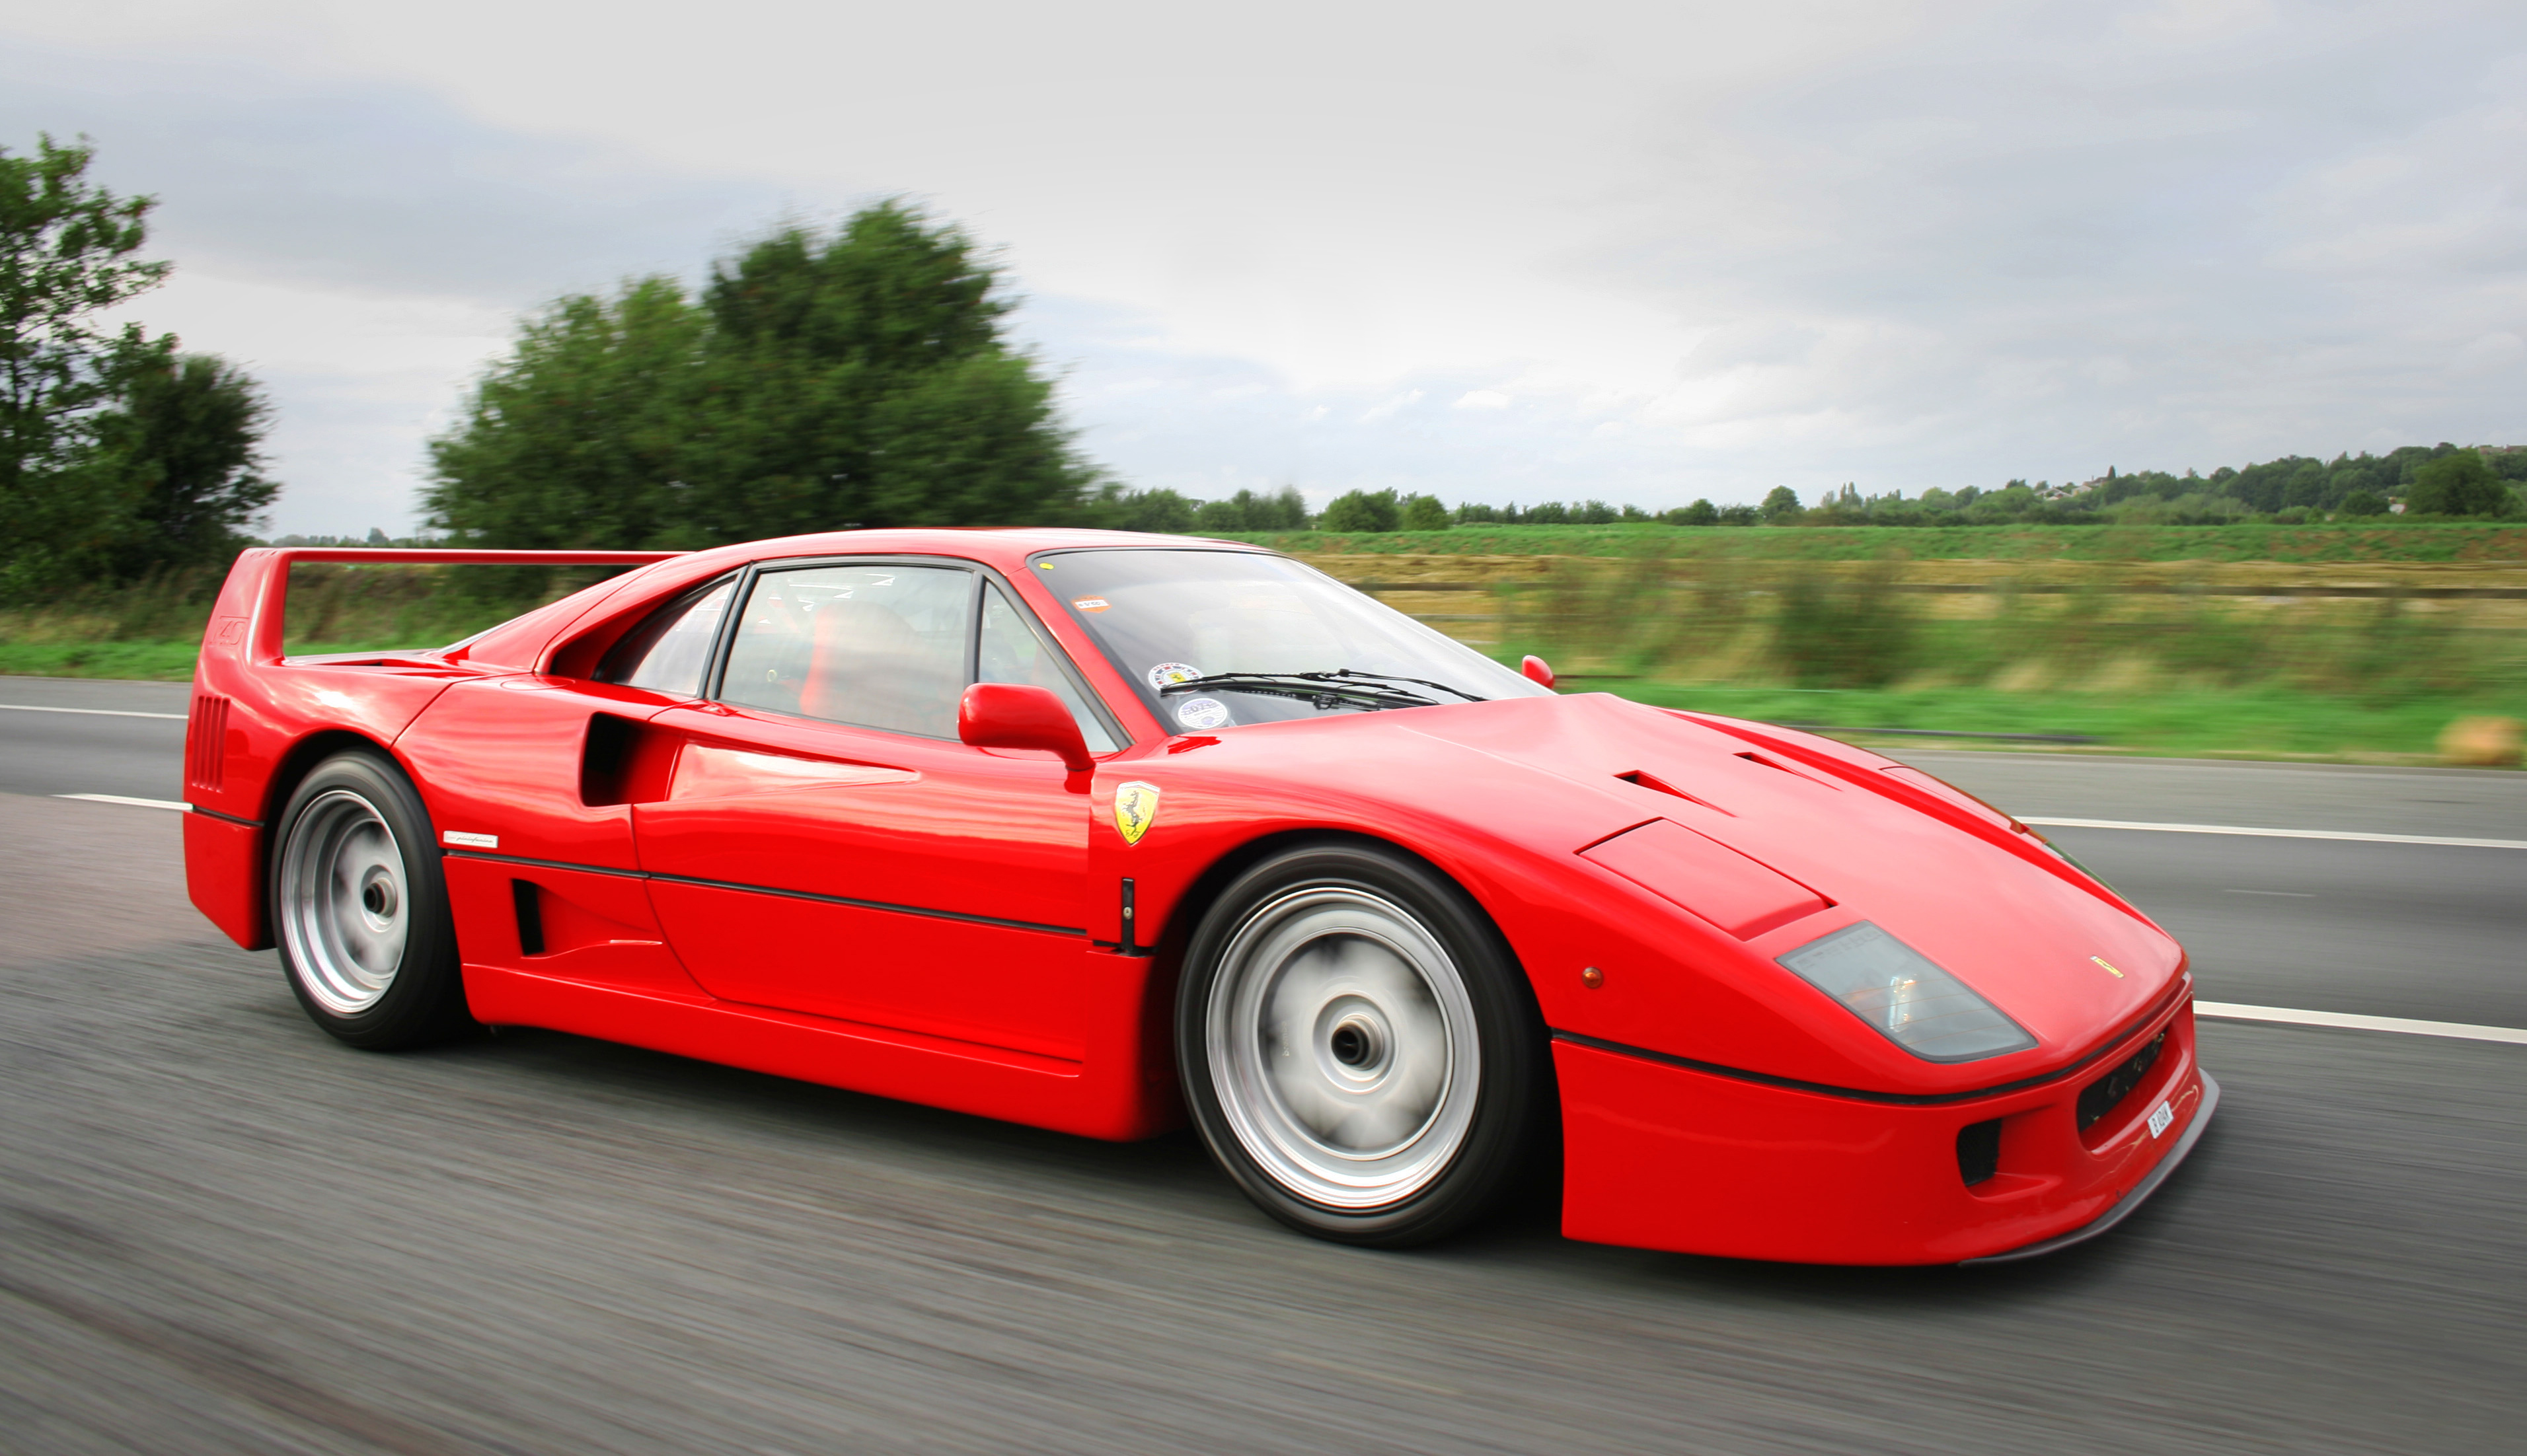 File:F40 Ferrari 20090509.jpg - Wikipedia